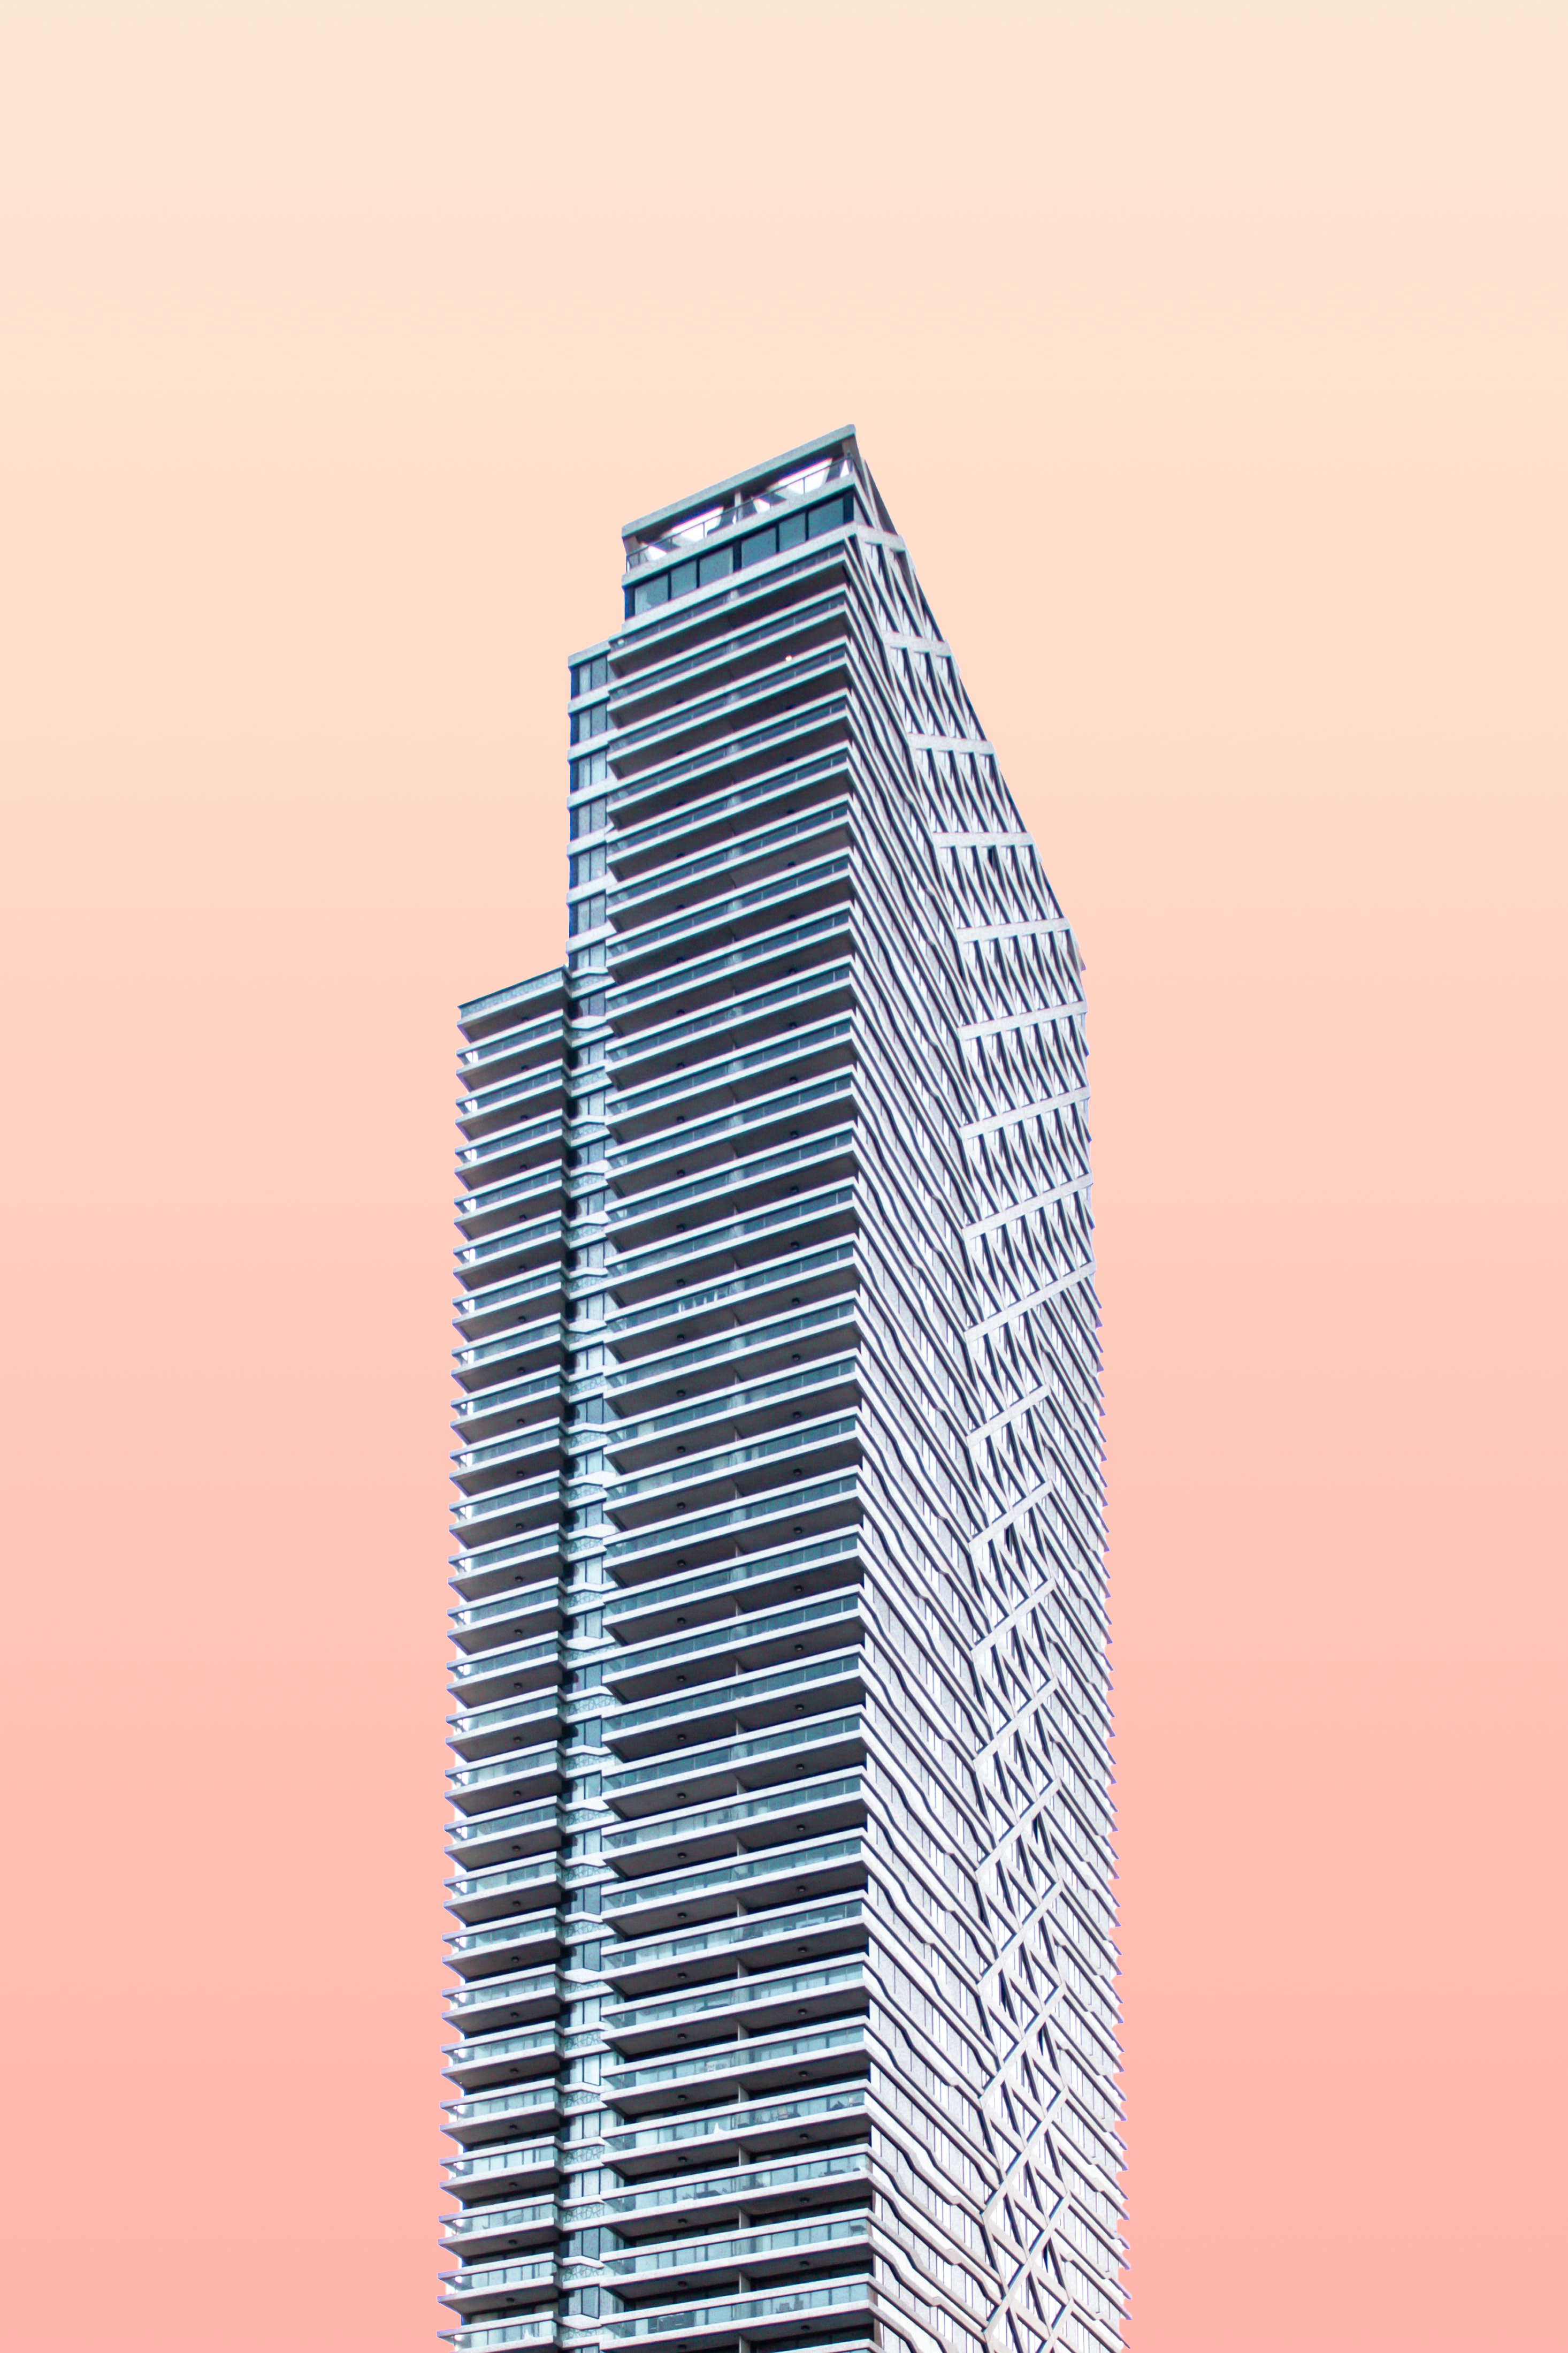 building, minimalism, facade, pink background 2160p